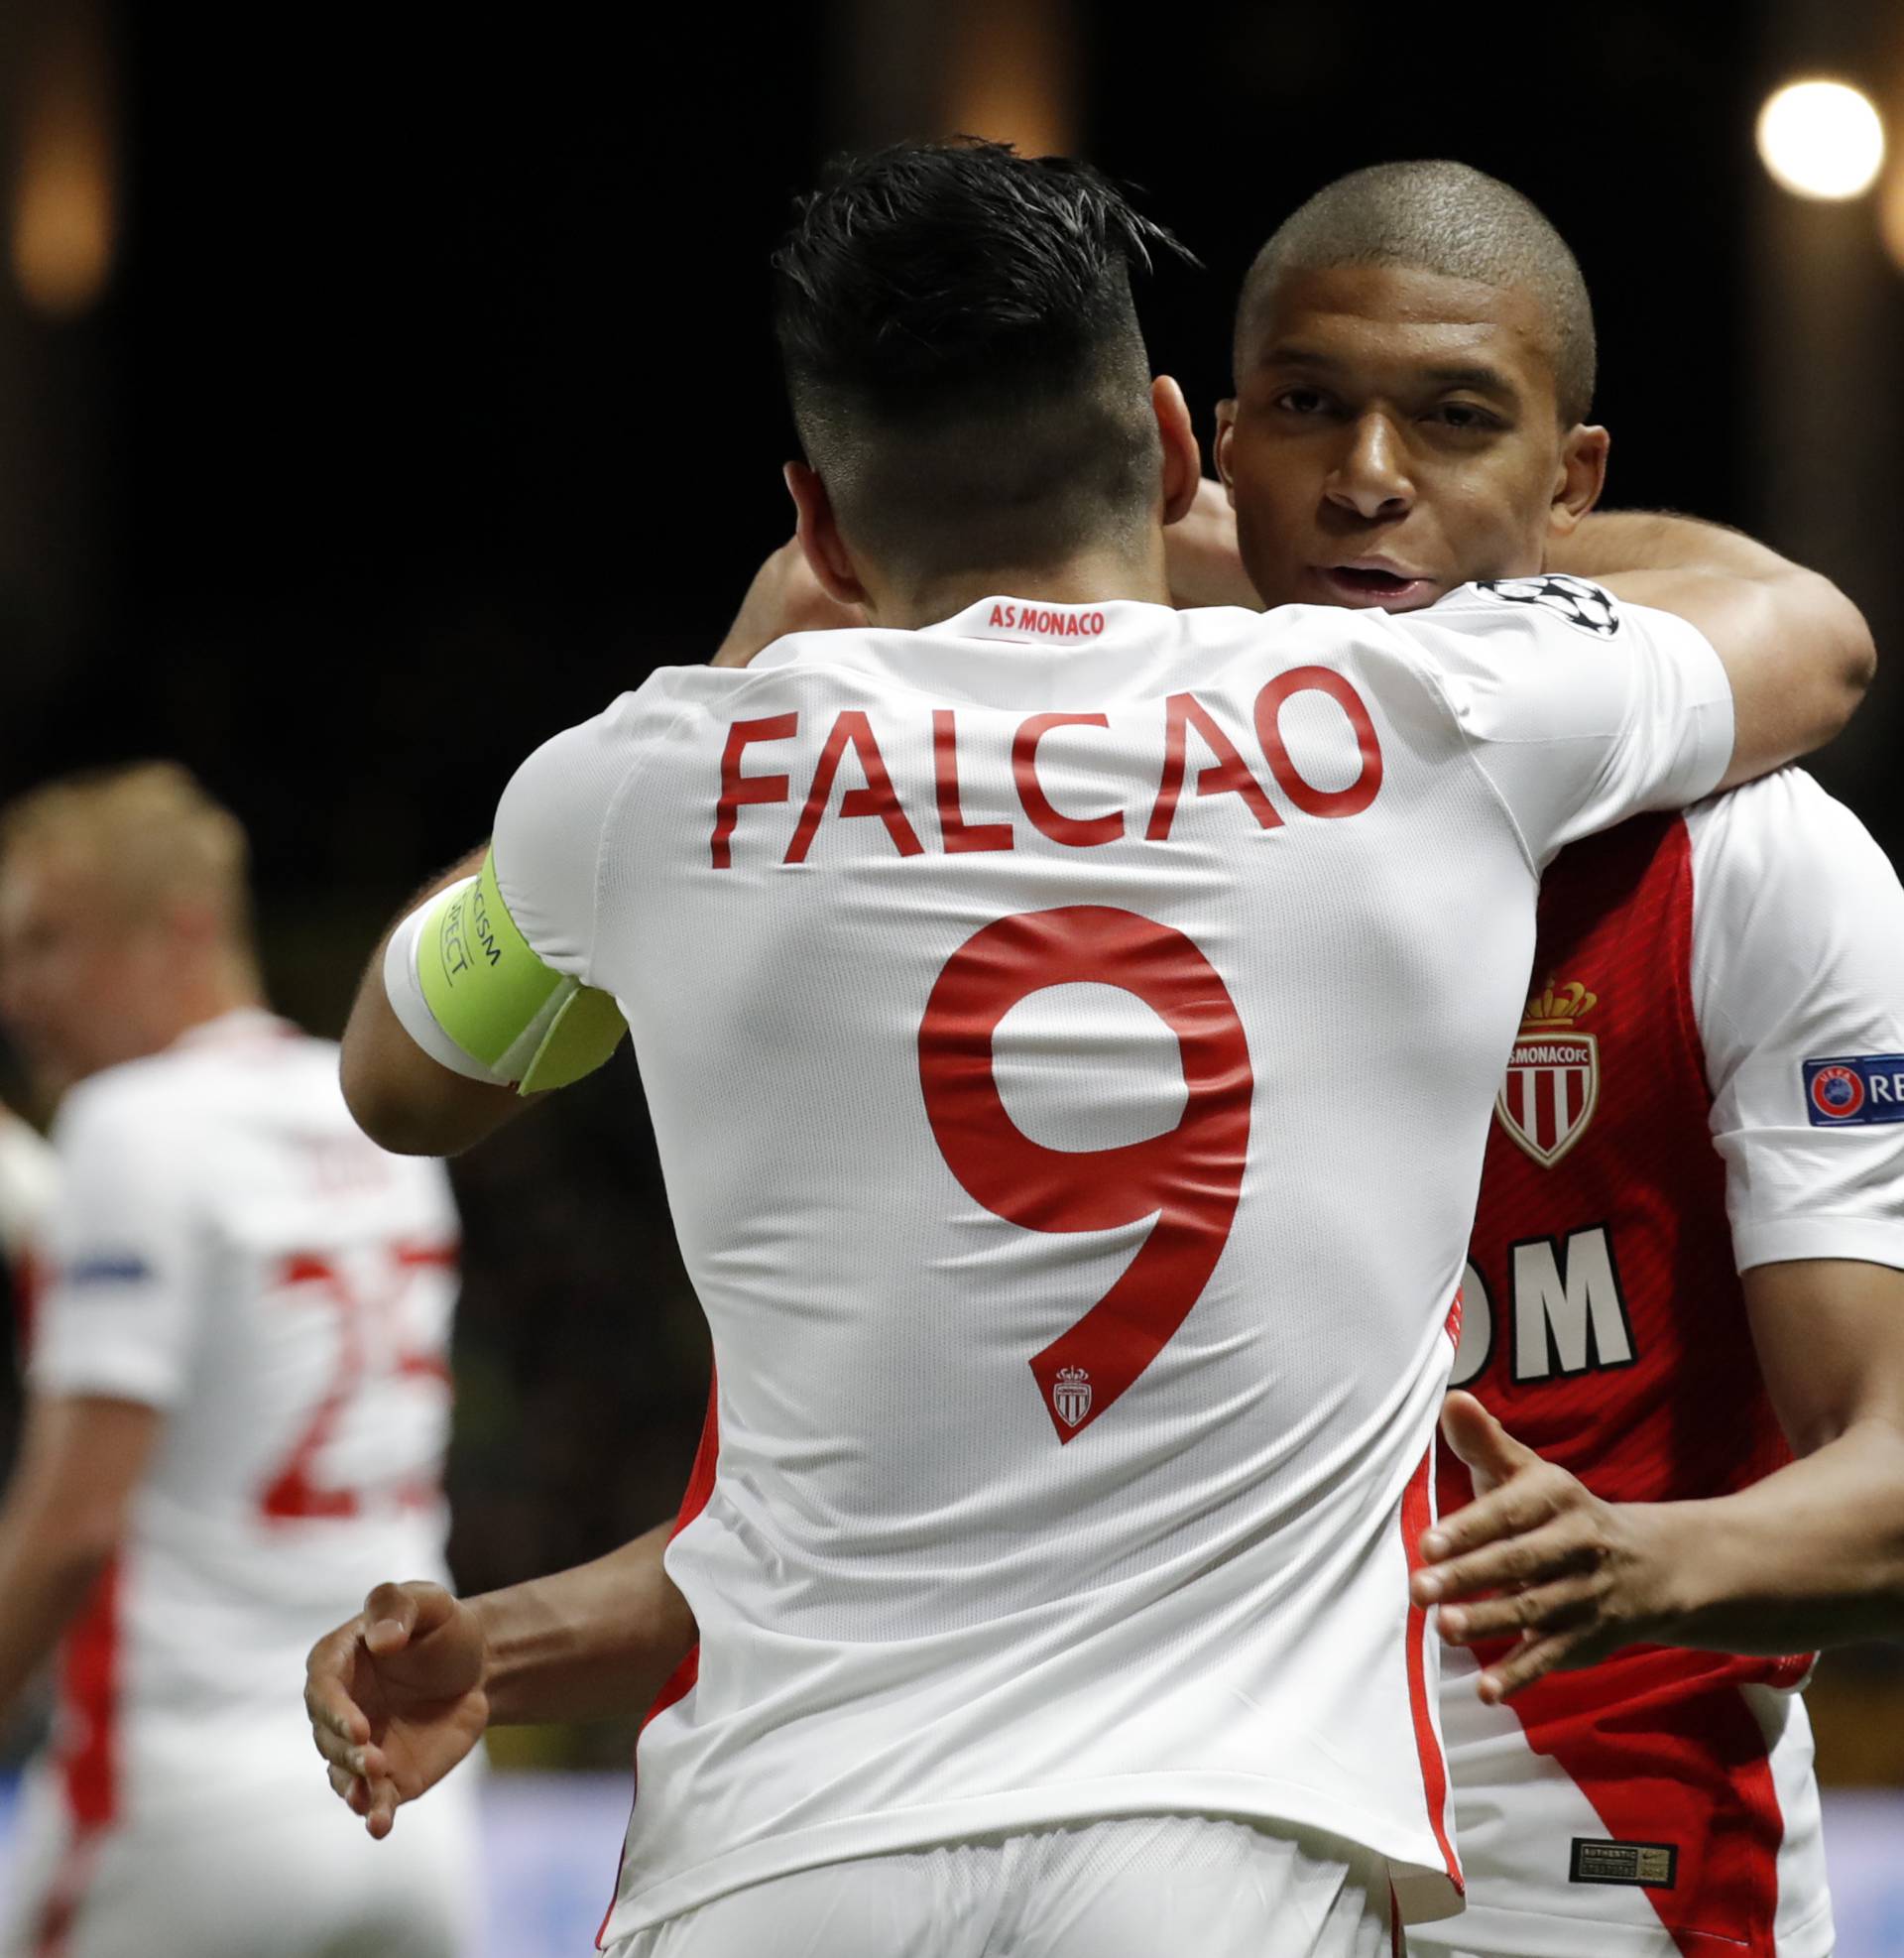 Monaco's Radamel Falcao celebrates scoring their second goal with Kylian Mbappe-Lottin